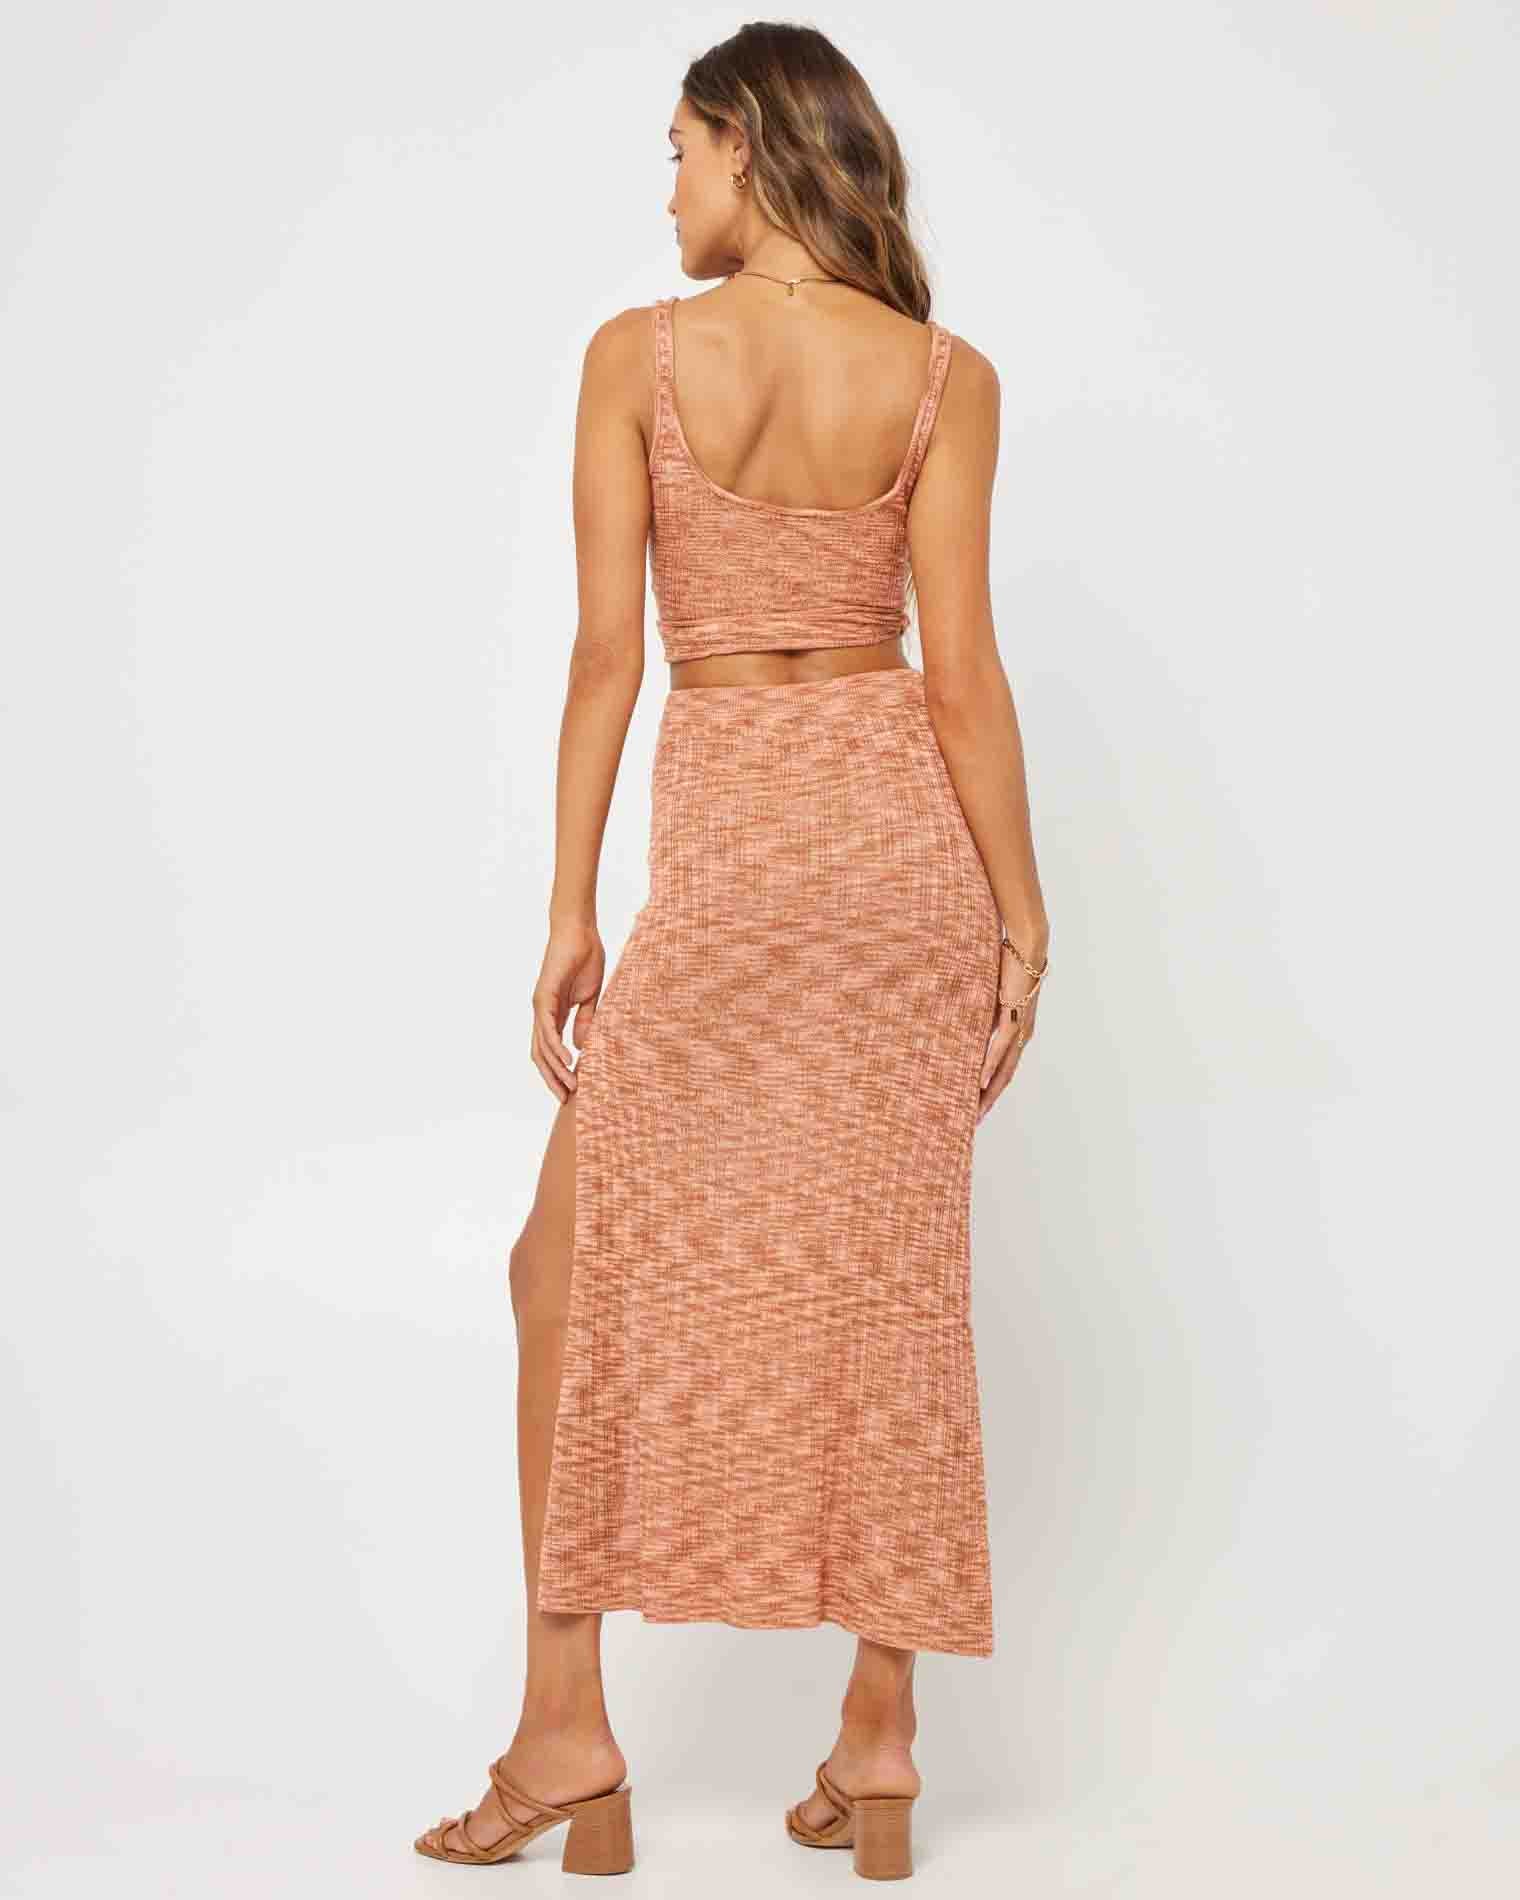 Zephyr Skirt Sahara | Model: Anna (size: S)